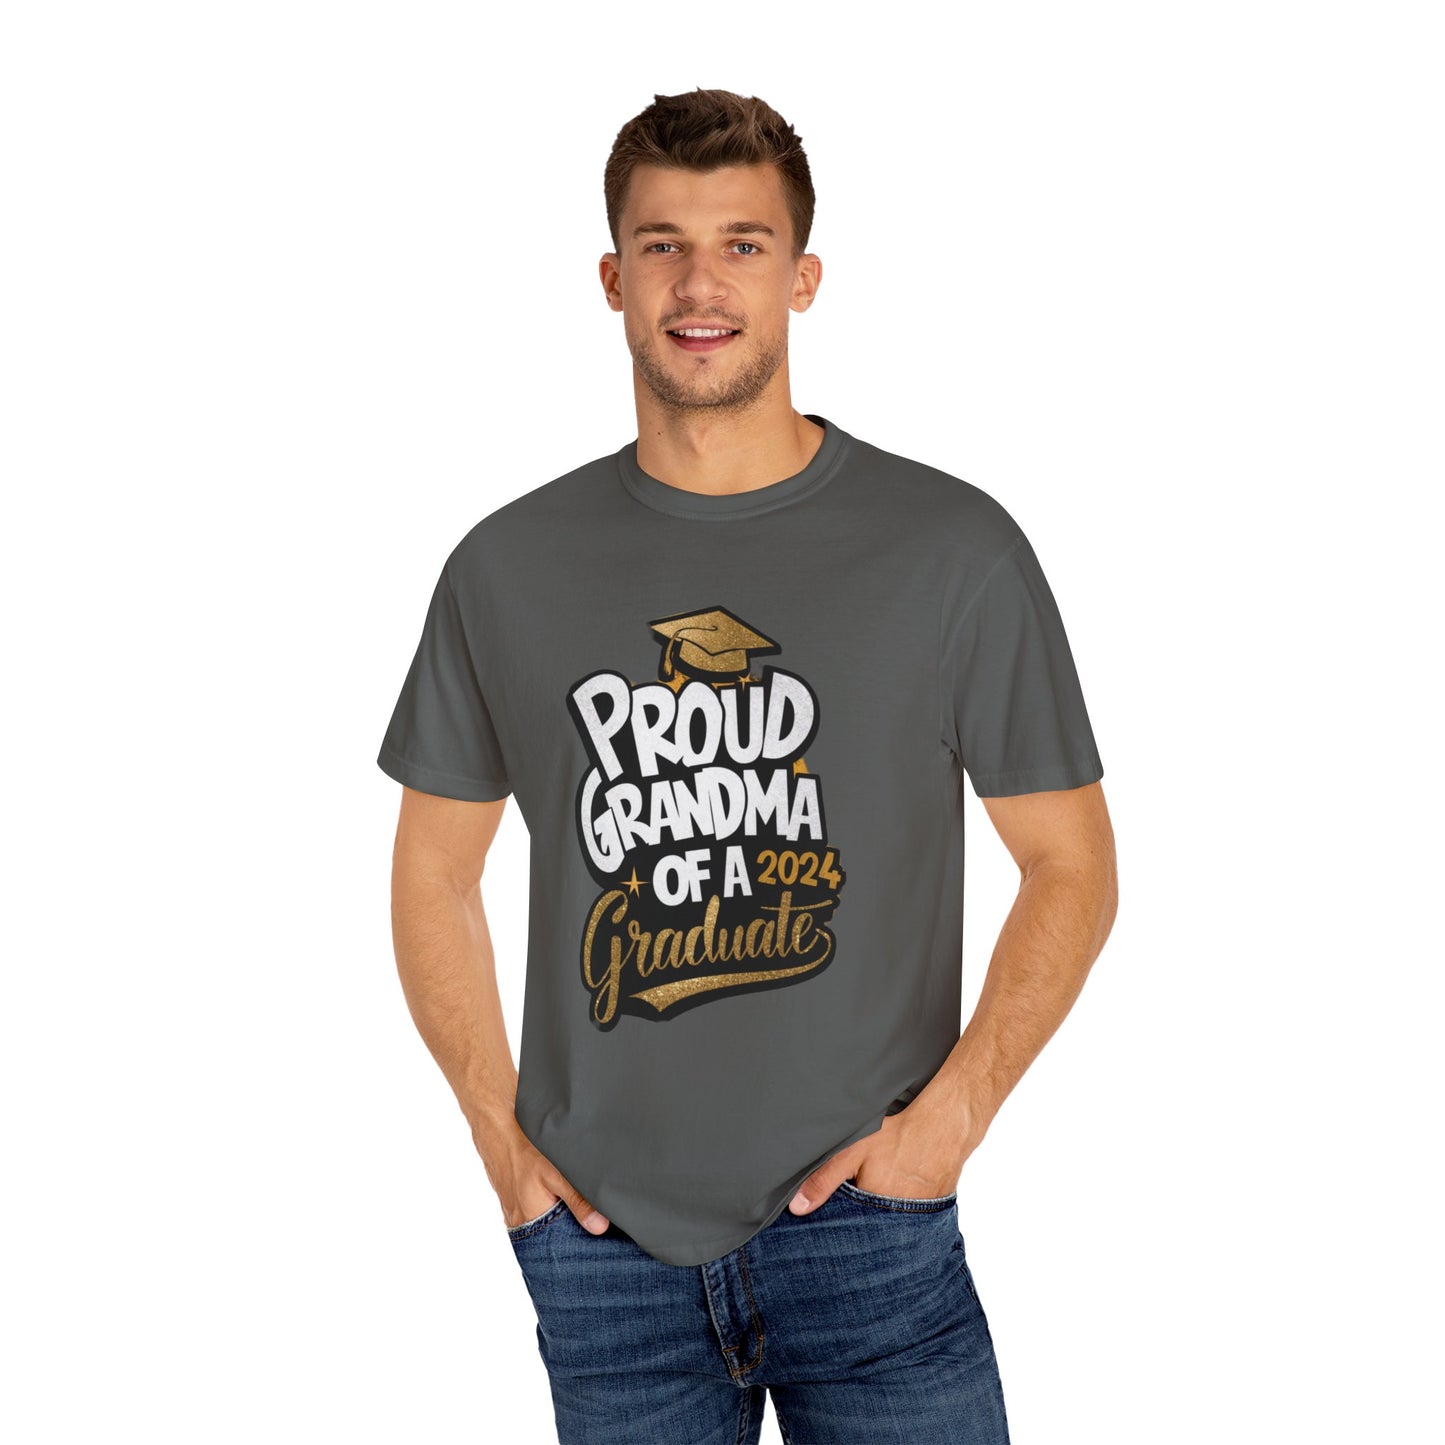 Proud of Grandma 2024 Graduate Unisex Garment-dyed T-shirt Cotton Funny Humorous Graphic Soft Premium Unisex Men Women Pepper T-shirt Birthday Gift-51